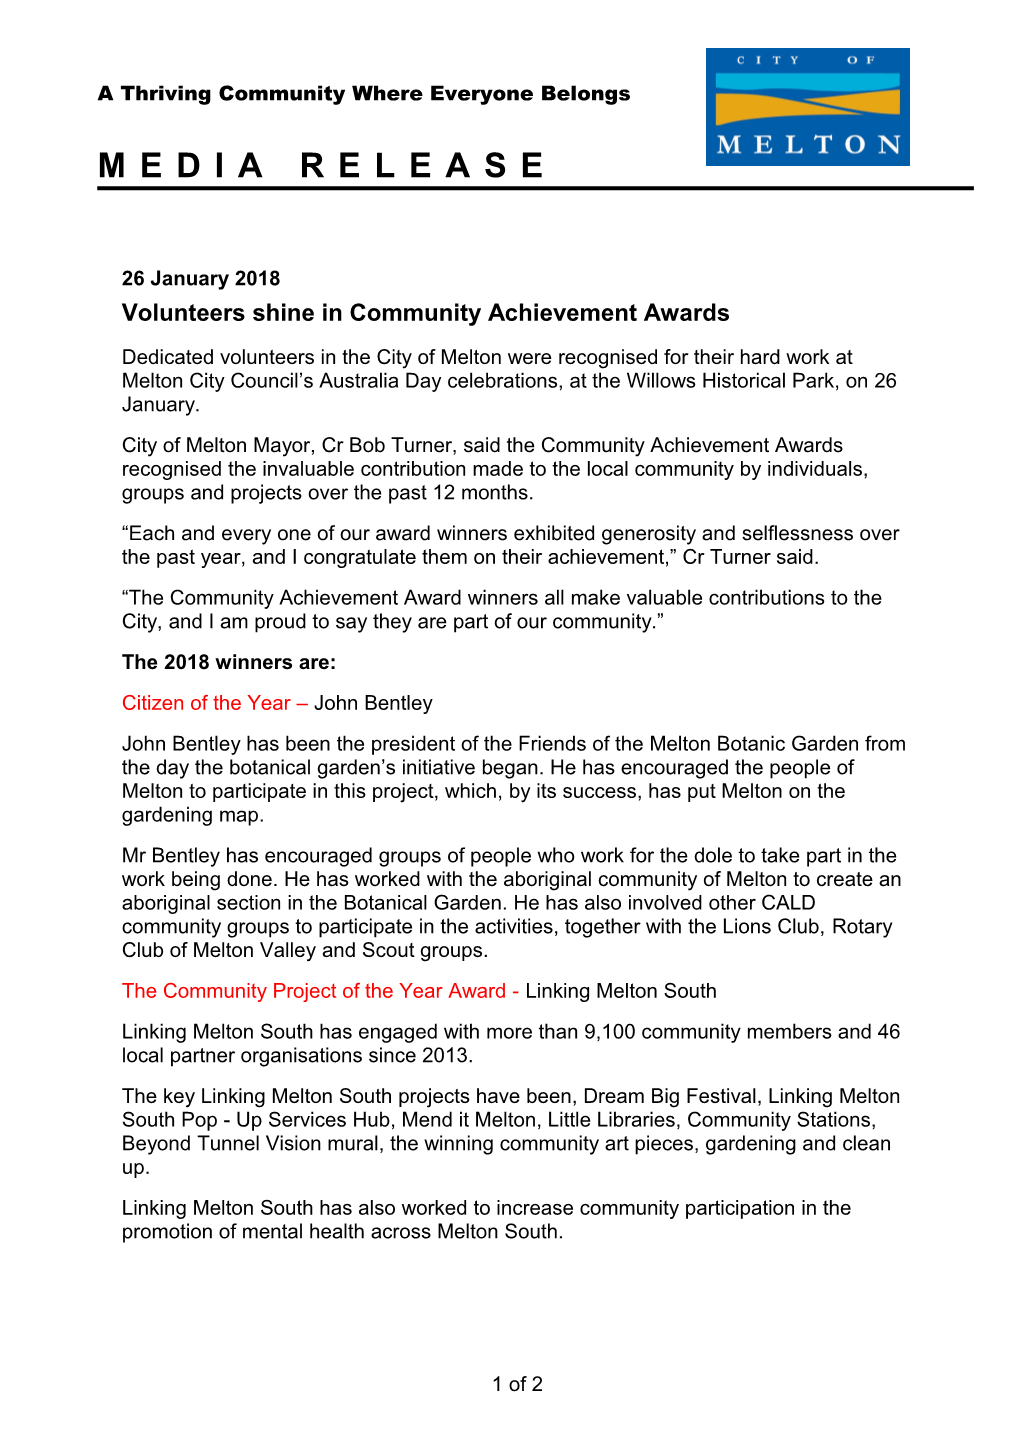 Volunteers Shine in Community Achievement Awards